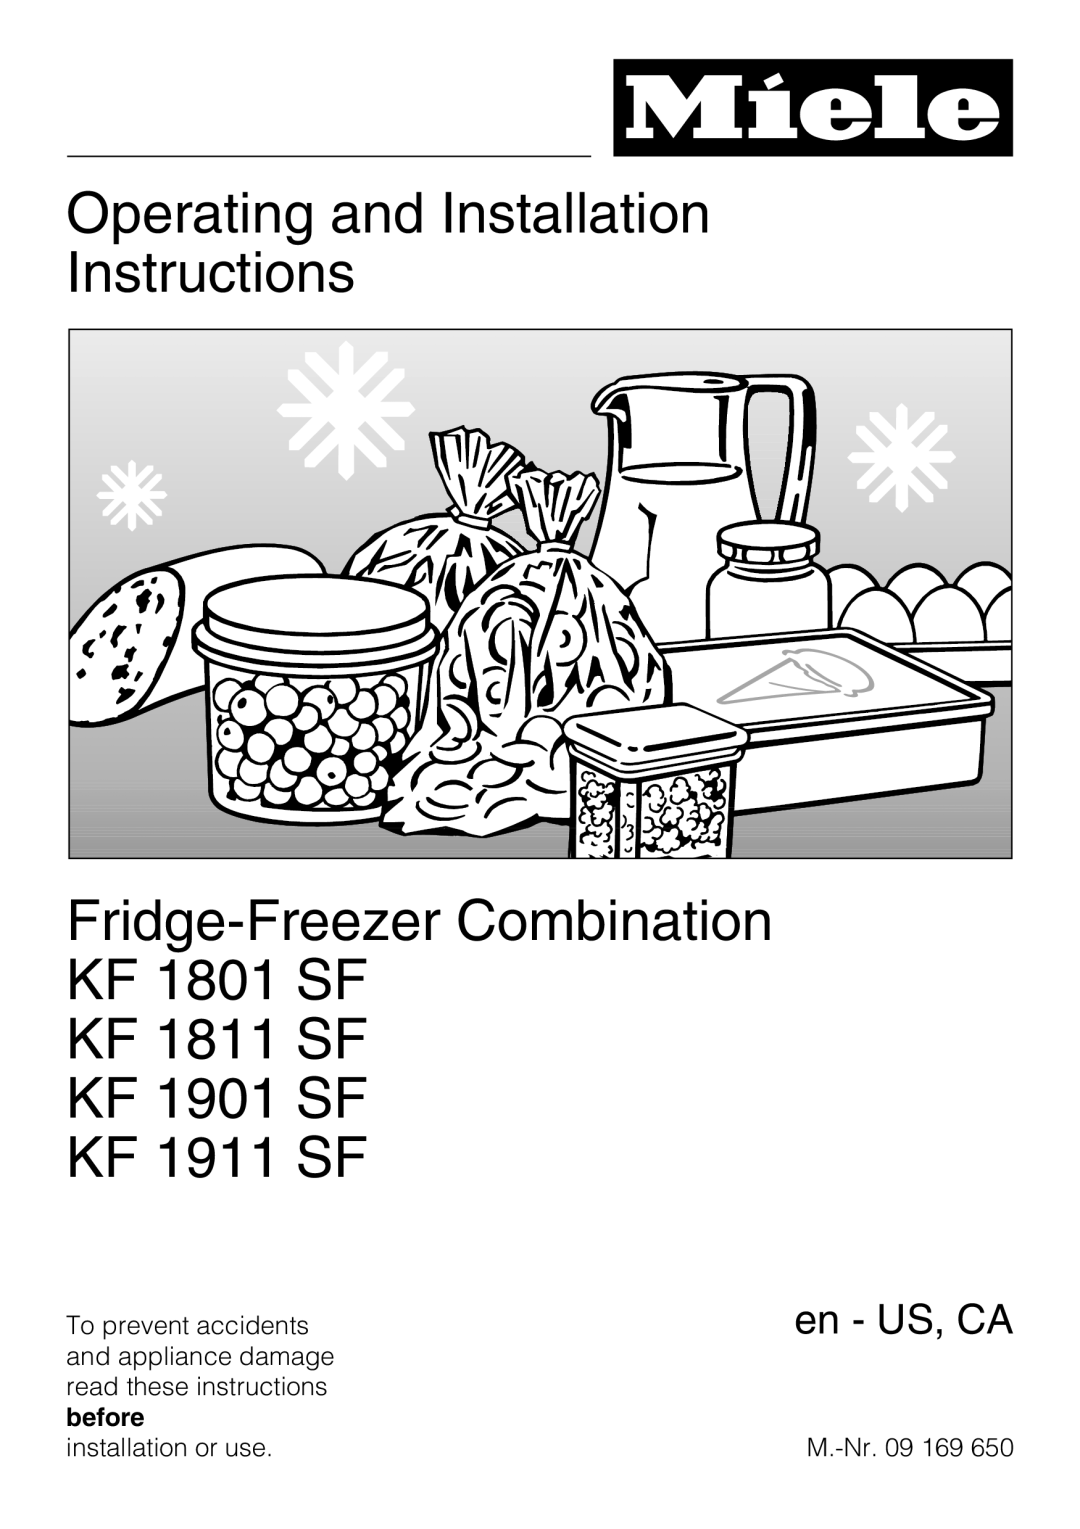 Miele KF 1801 SF installation instructions Operating and Installation Instructions, KF 1901 SF KF 1911 SF, en - US, CA 